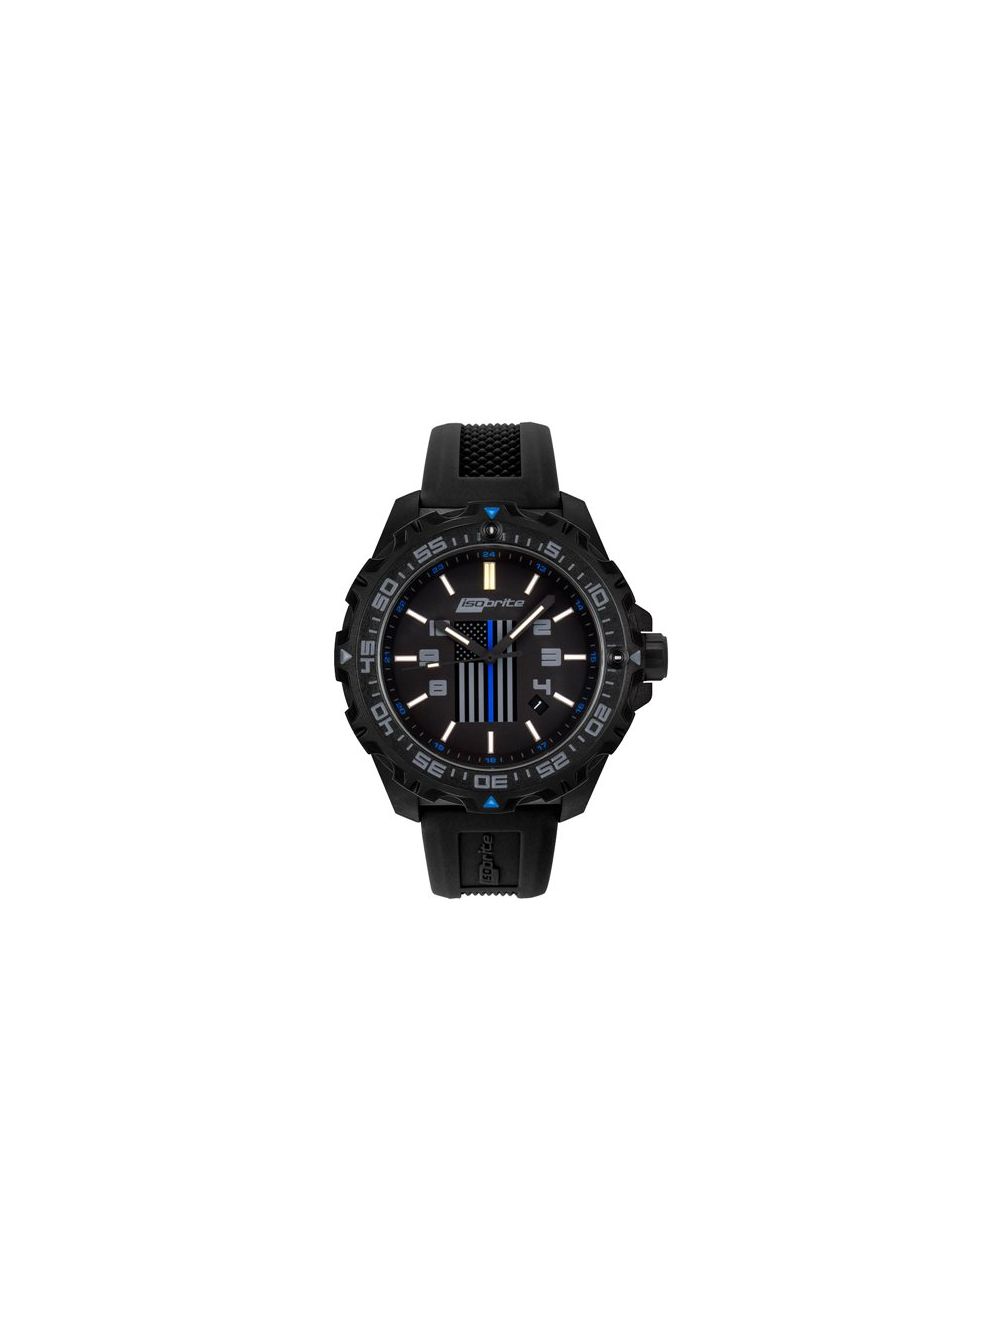 Isobrite Law Enforcement Limited Edition T100 Tritium Illuminated Watch